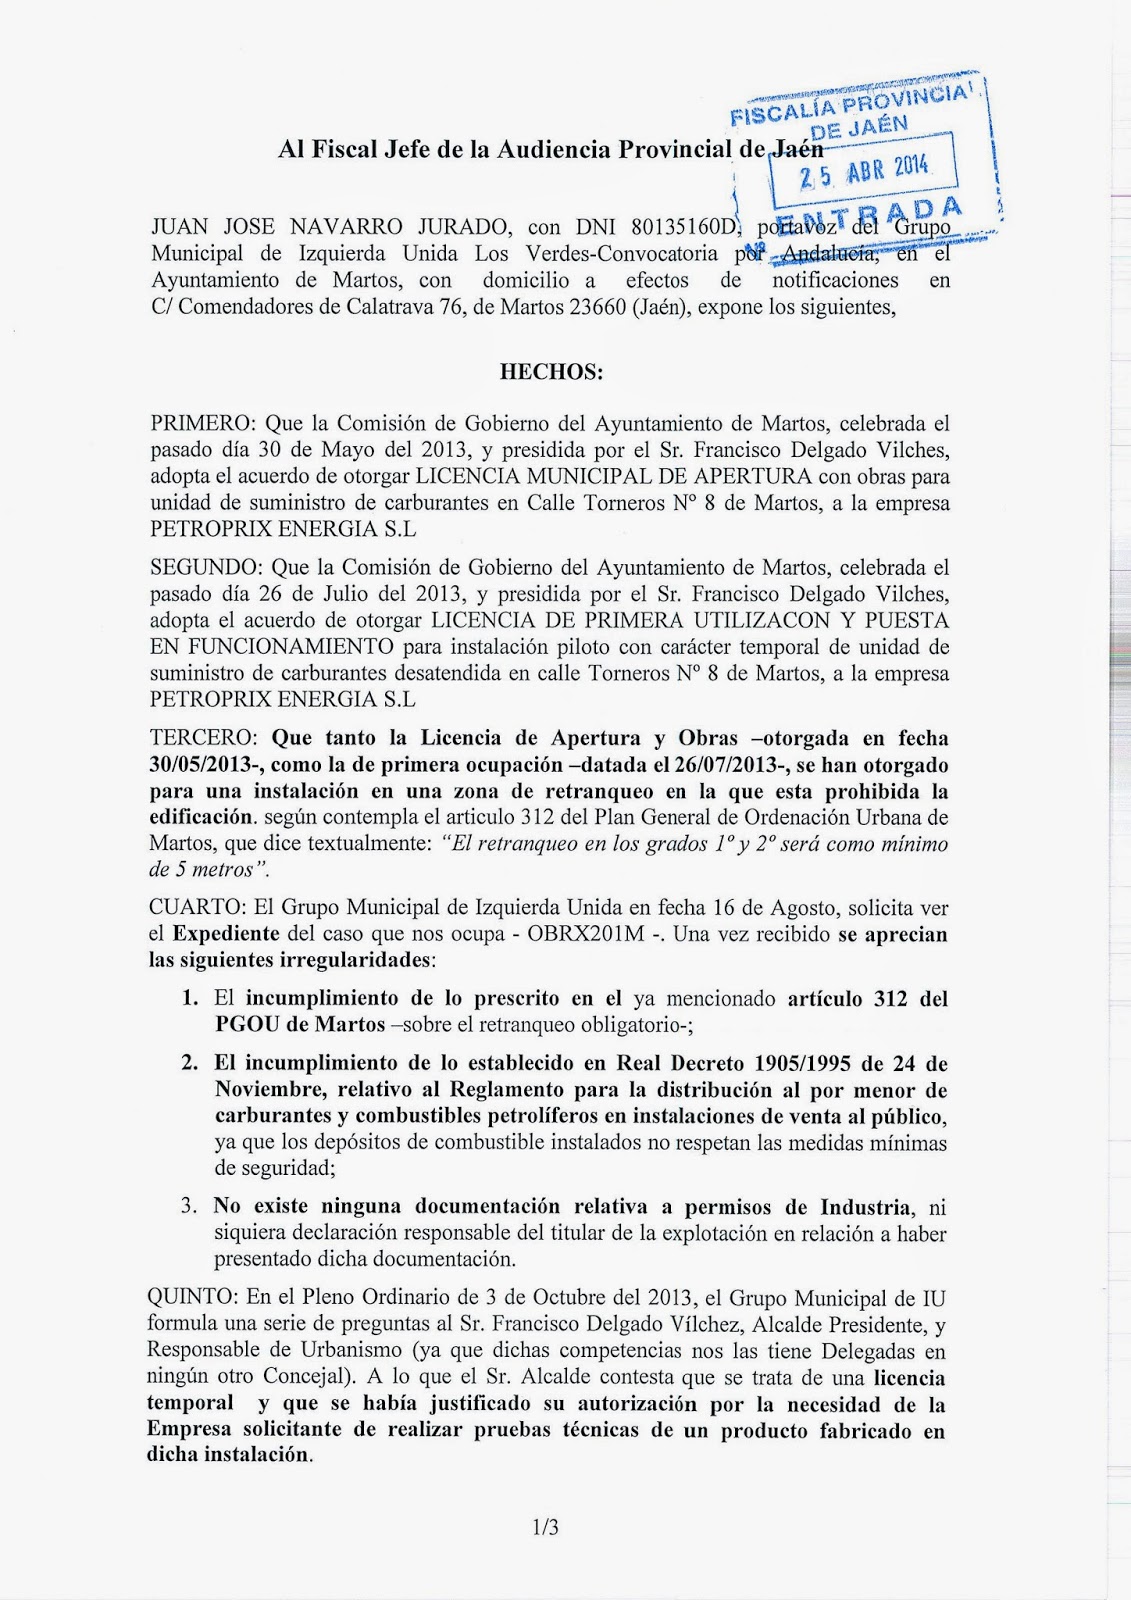 https://sites.google.com/site/izquierdaunidamartos/documentos/denuncia%20fiscalia%2025-04-2014.pdf?attredirects=0&d=1